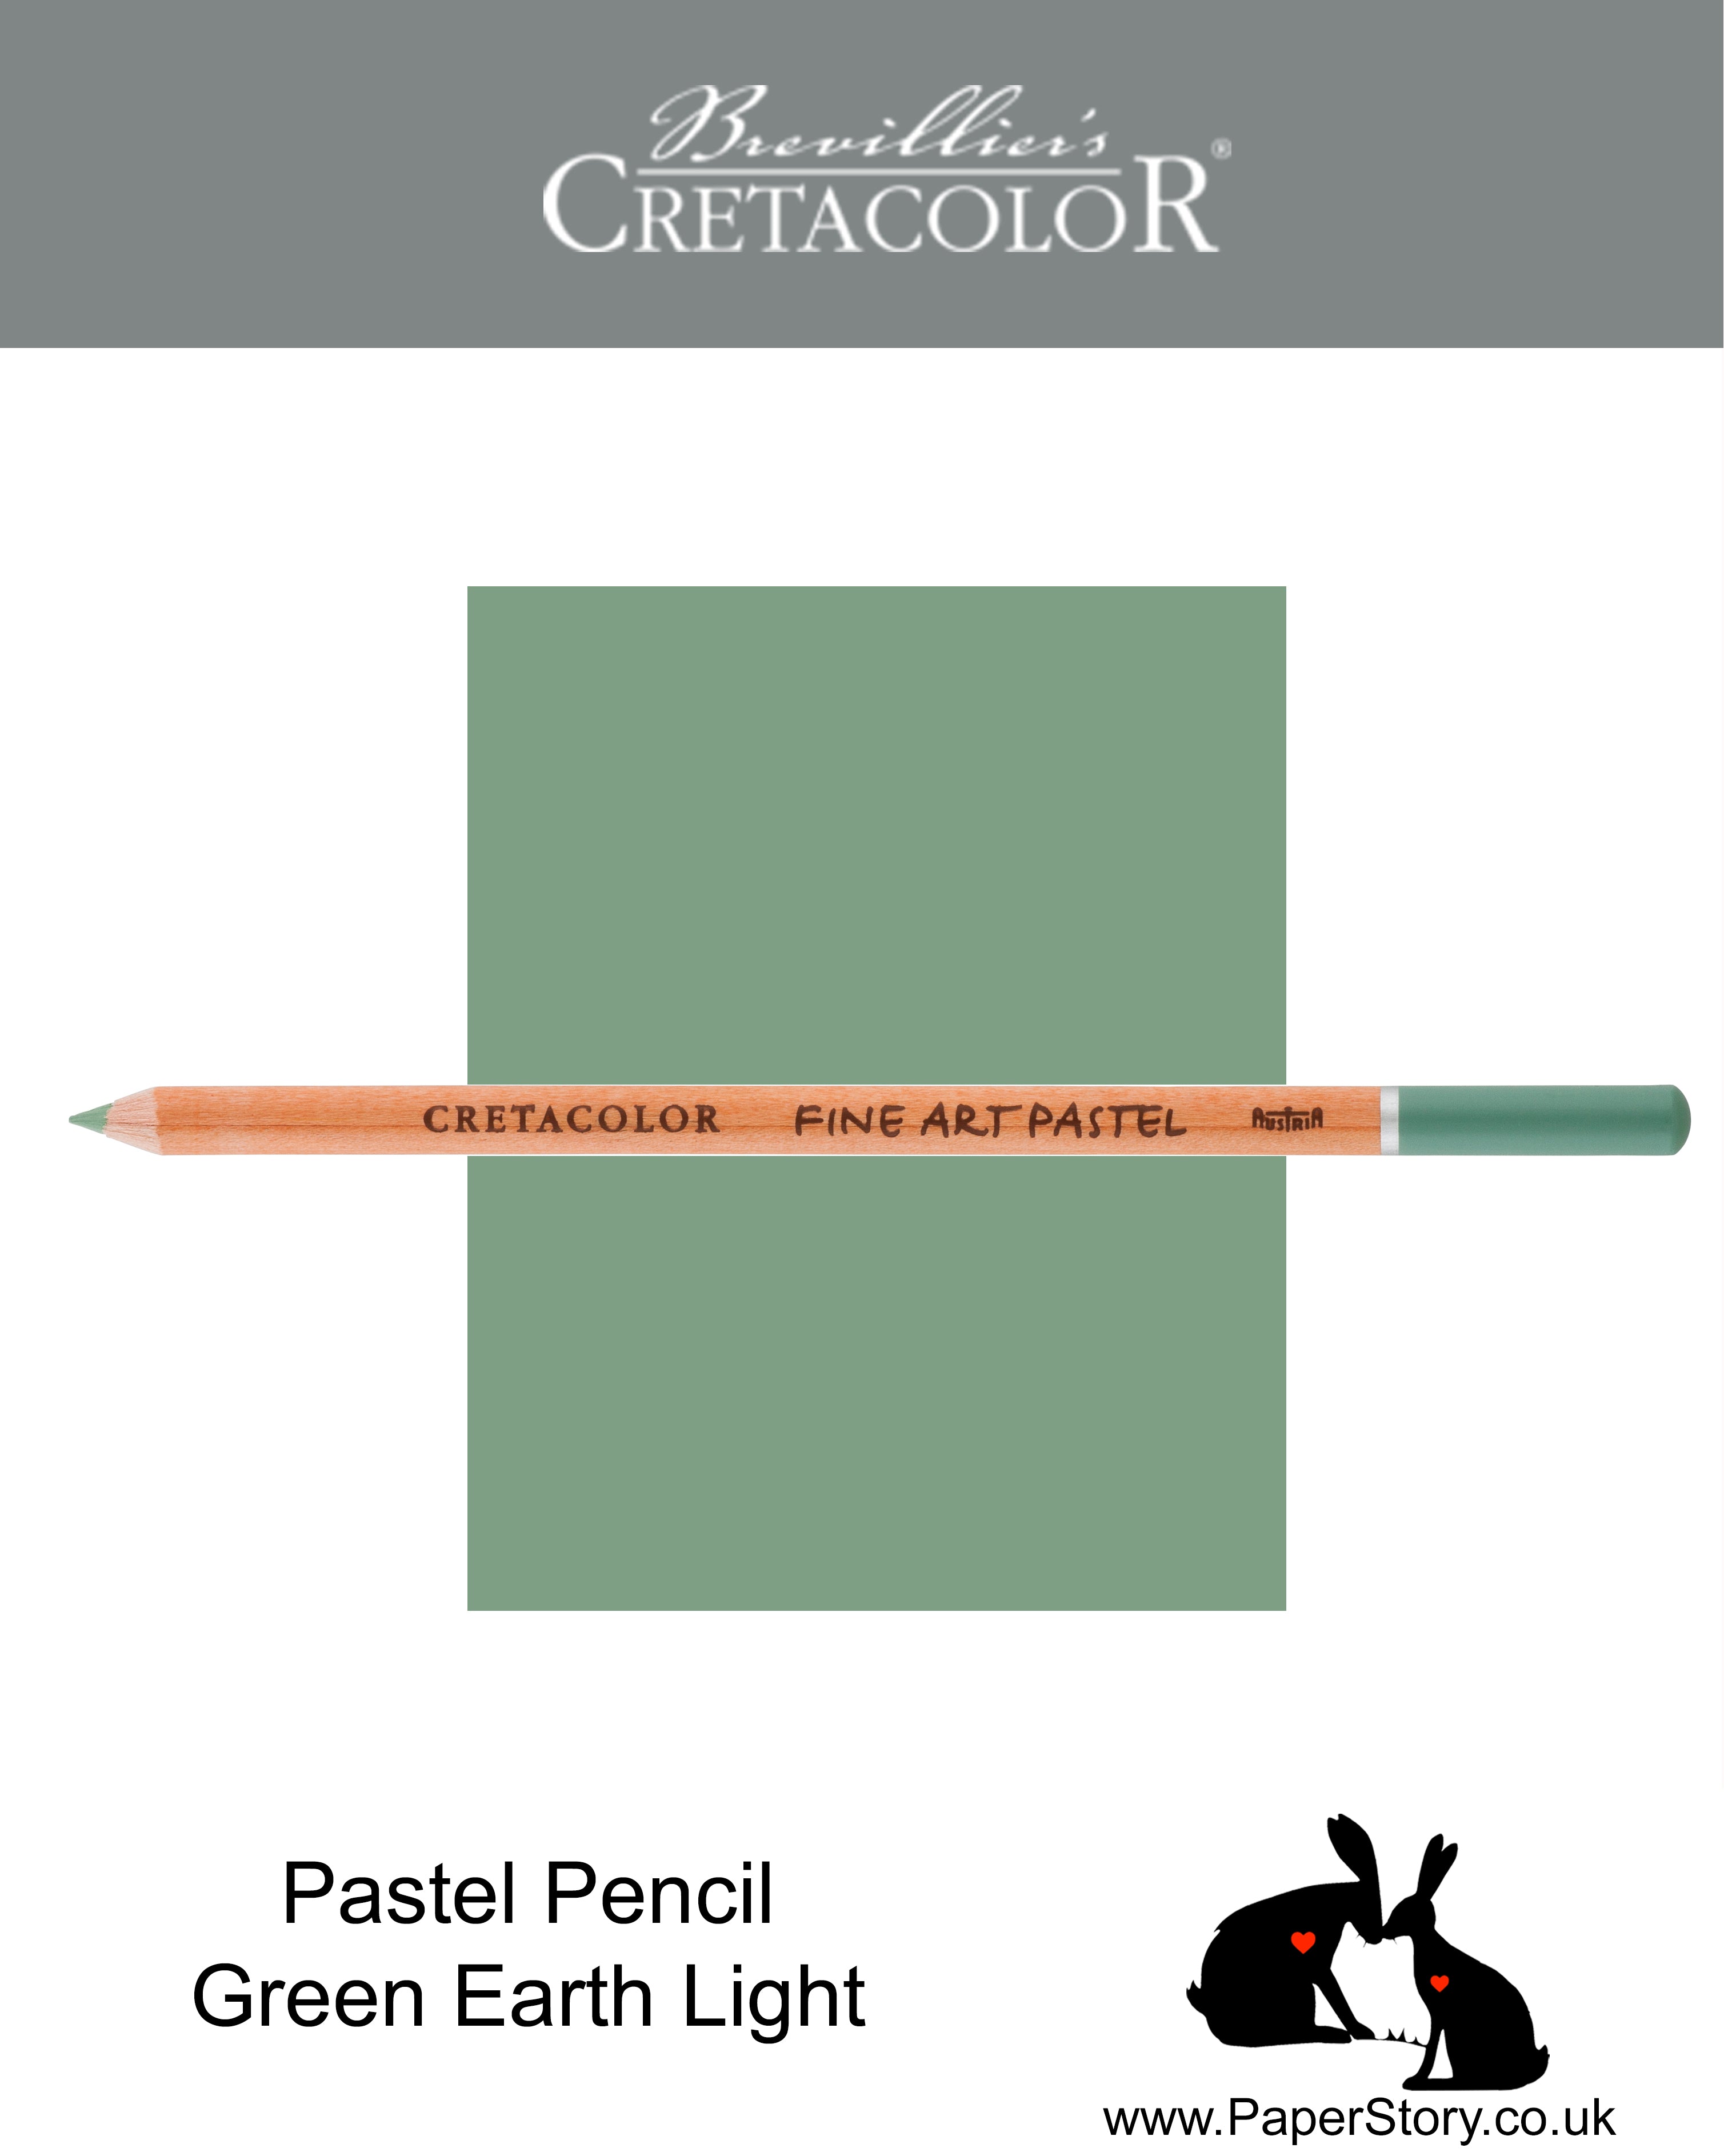 Cretacolor 471 89 Artists Pastel Pencil Green Earth Light